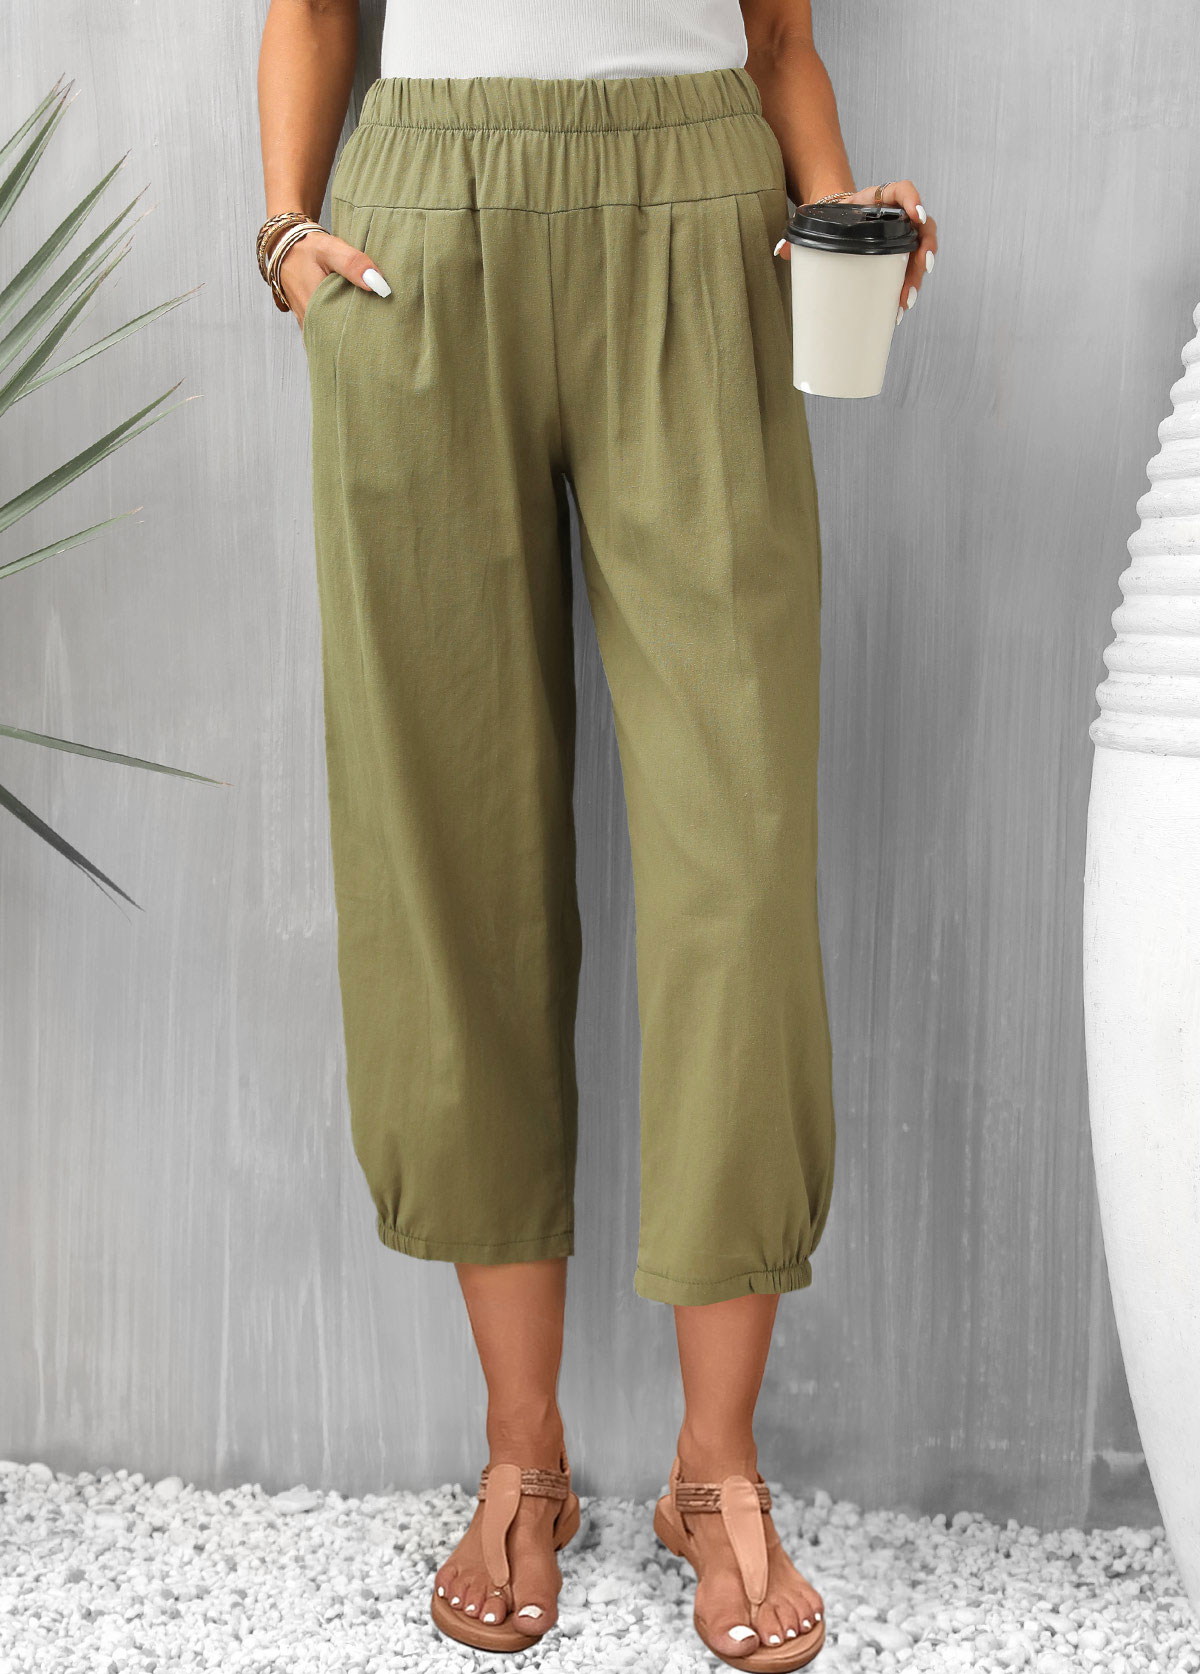 Regular Pocket Olive Green Elastic Waist Pants